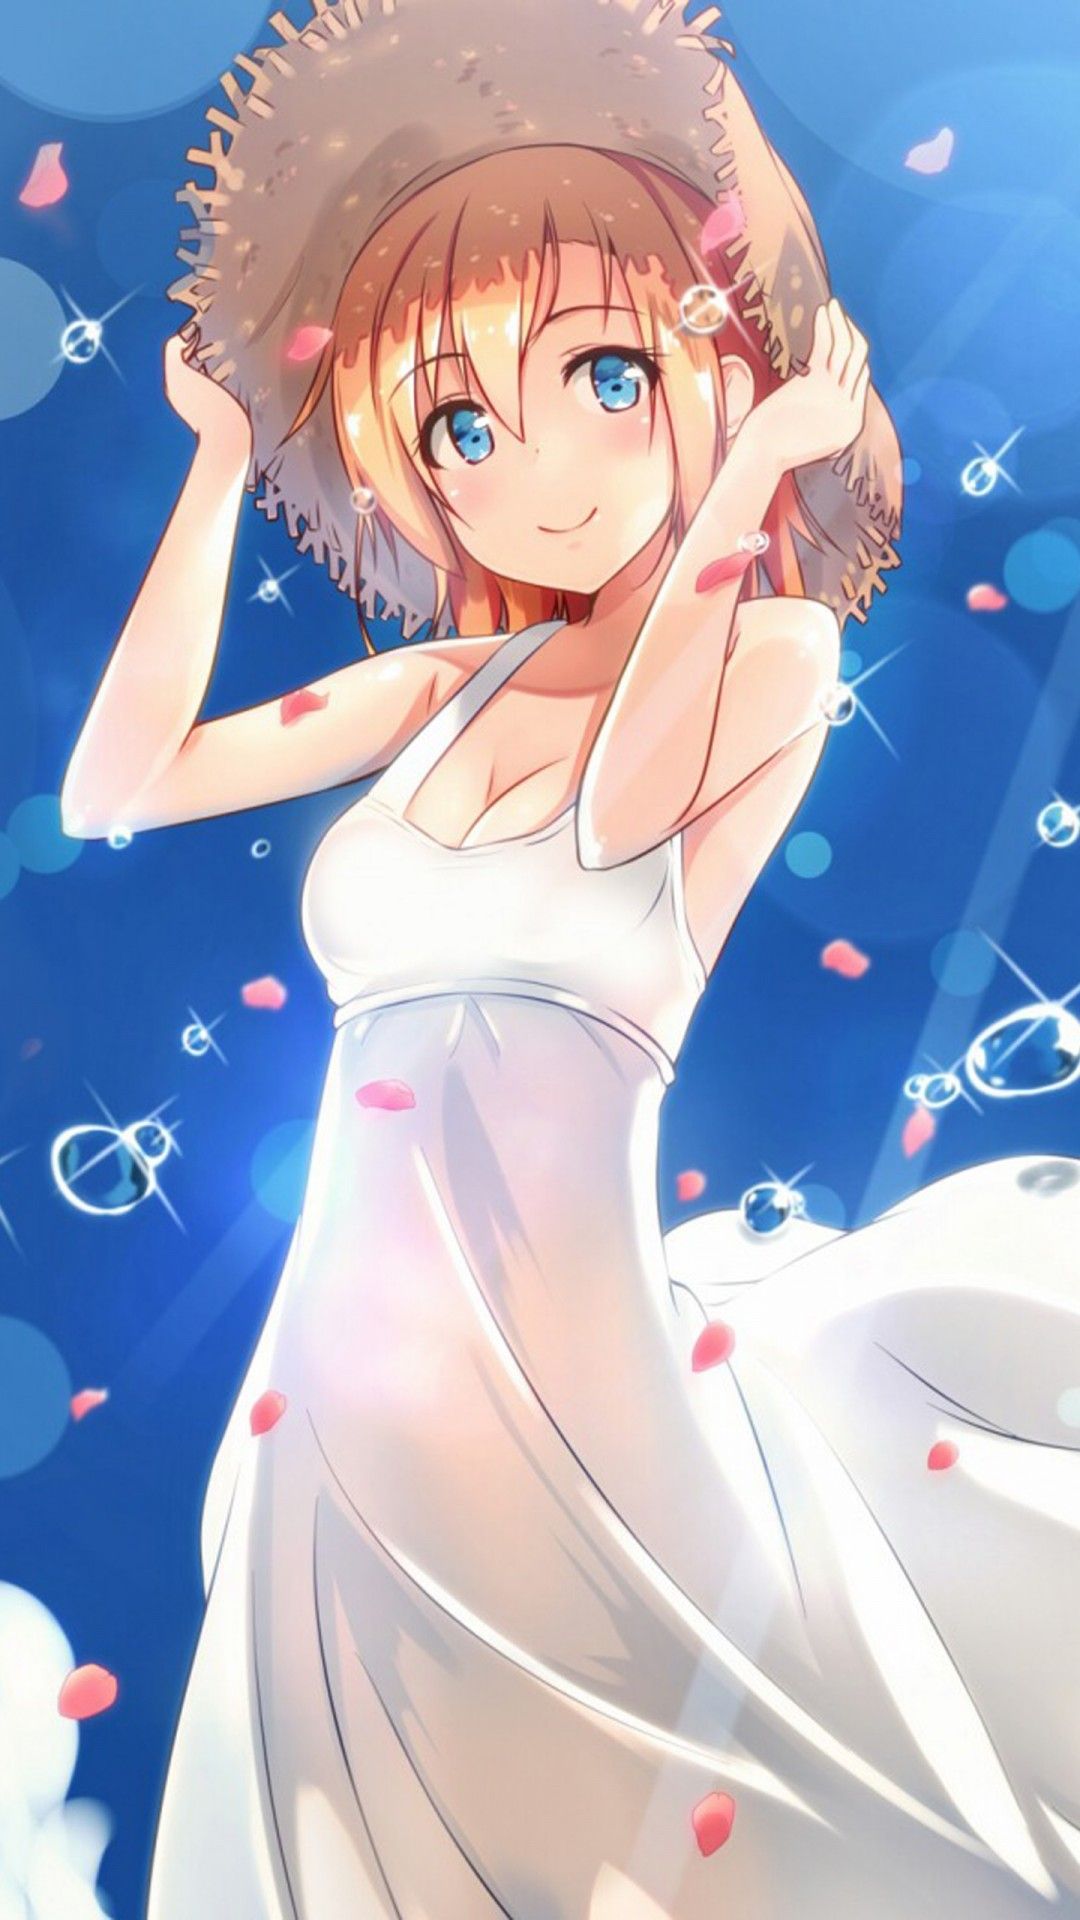 Sunshine Anime Girl IPhone 6 6 Plus And IPhone 5 4 Wallpaper